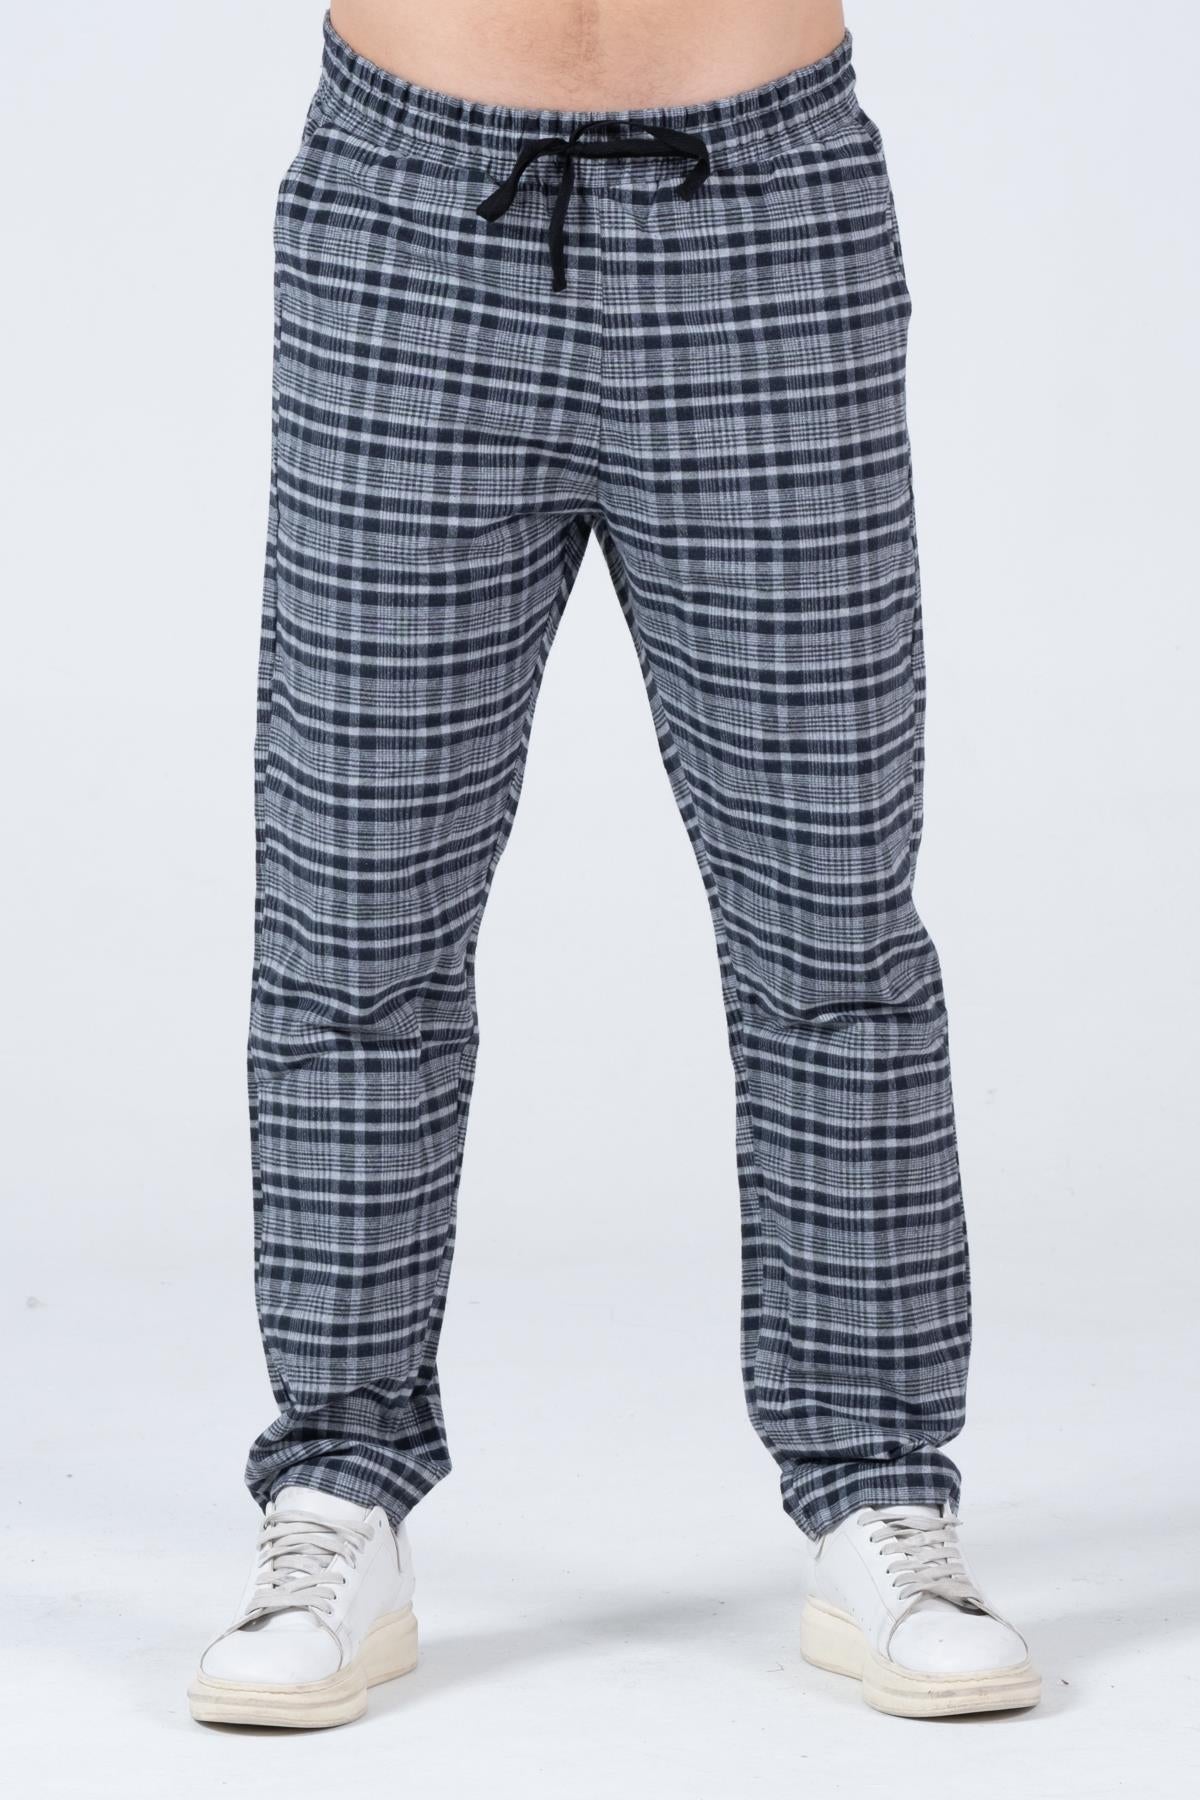 Men's plaid flannel sports pajamas six comfortable cutting